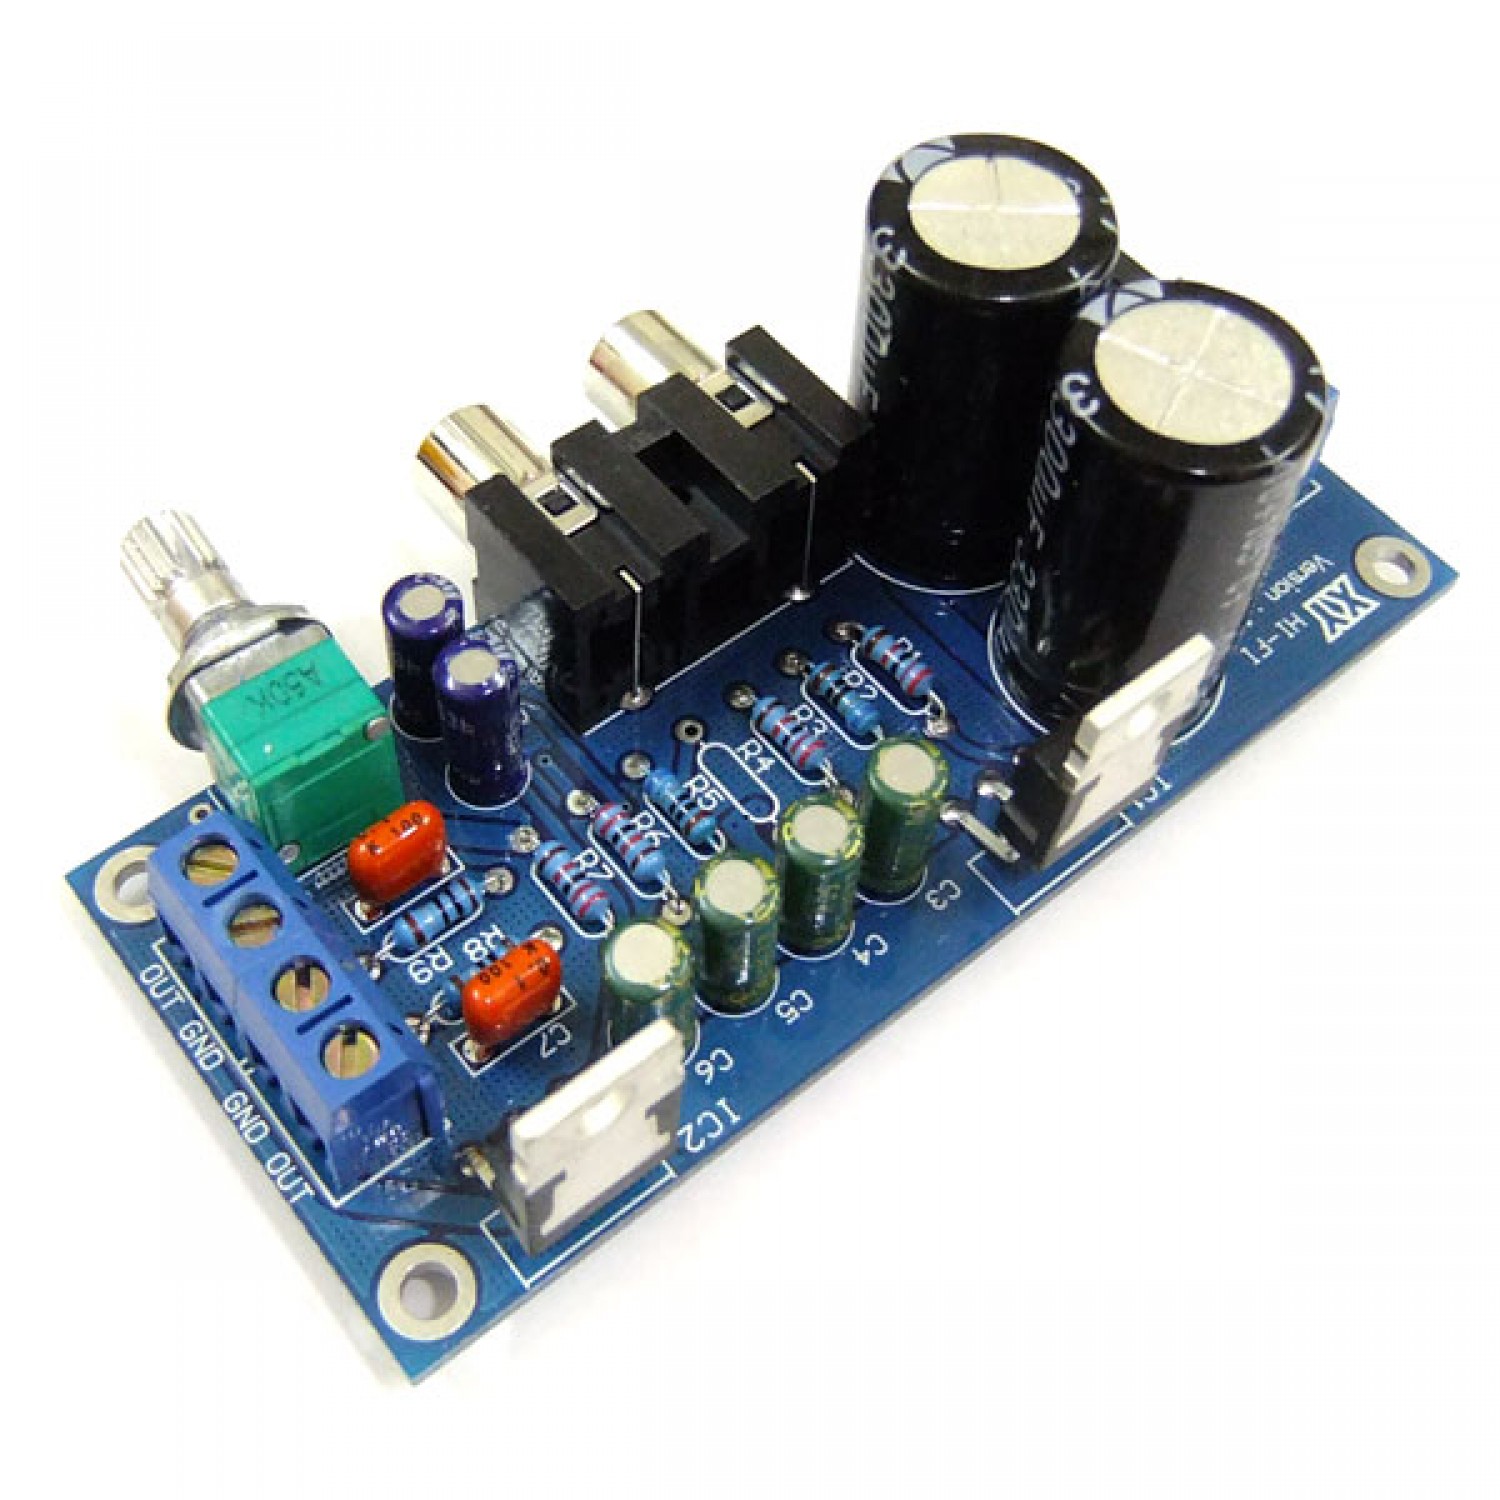  TDA2030A  Stereo Audio Power  Amplifier  Circuit OCL 18W 18W 